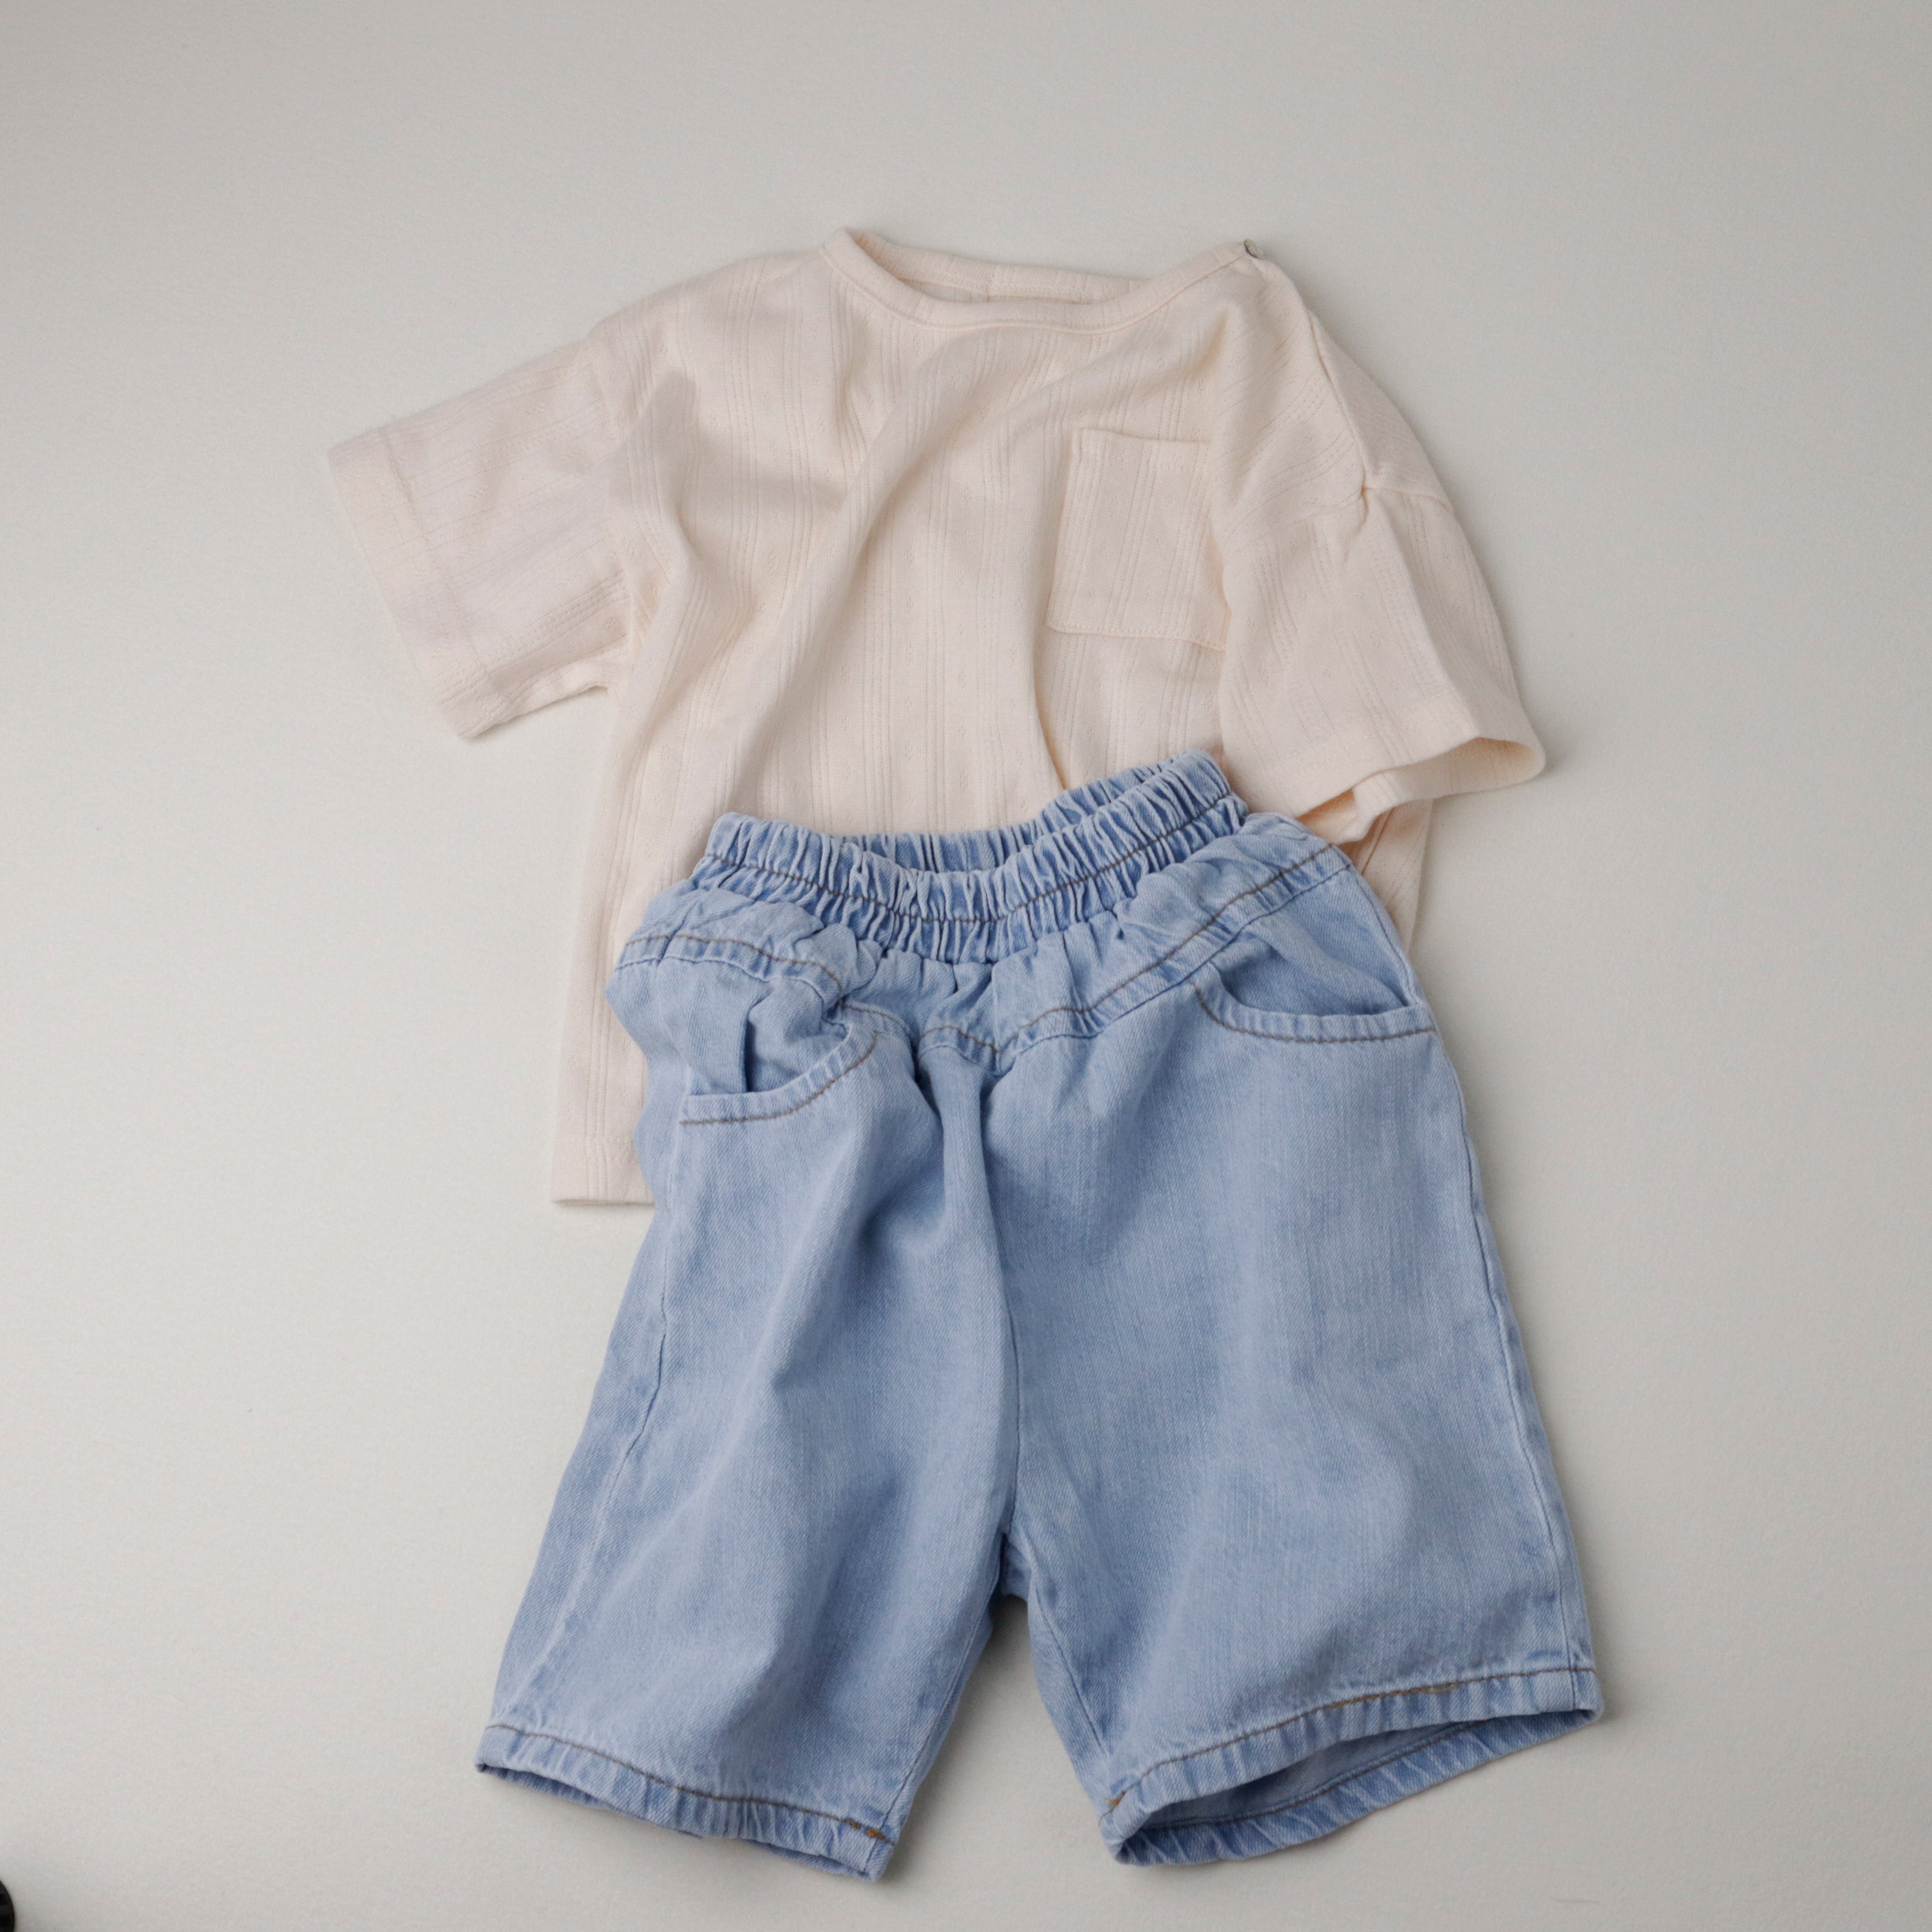 Minirobe Denim Shorts Baby & Toddler (Ready Stock)